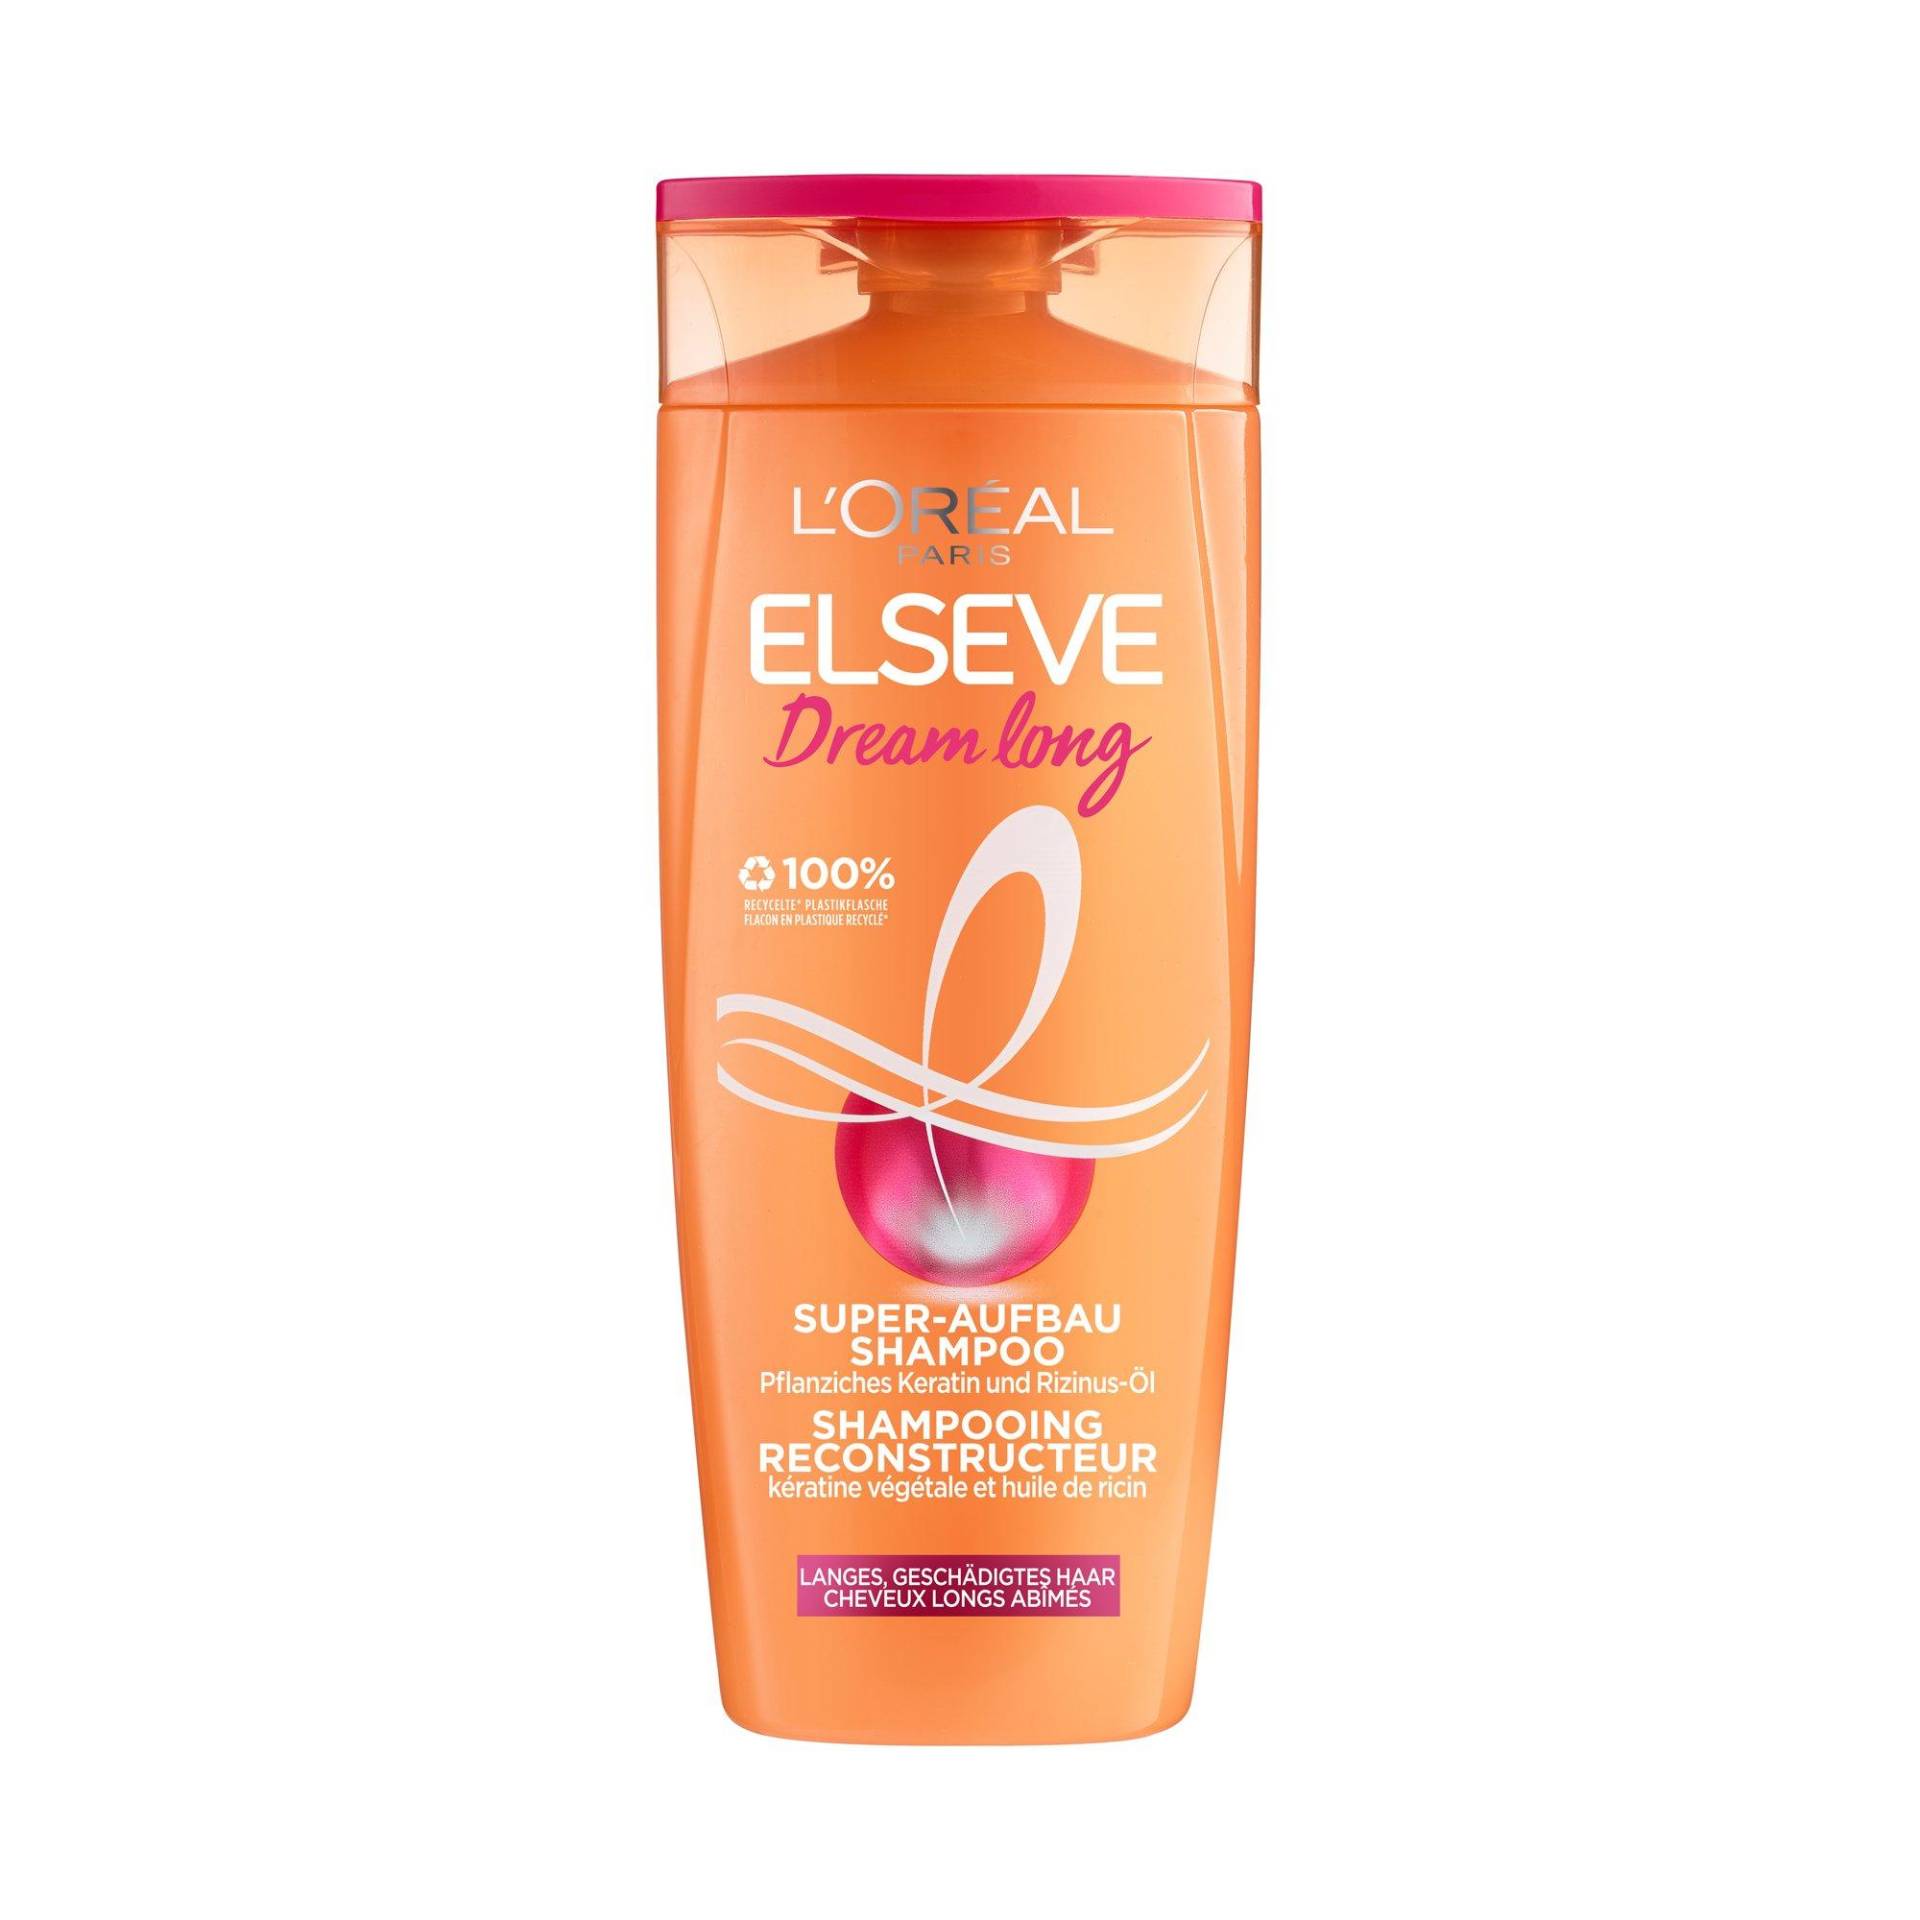 Dream Long : Super-aufbau Shampoo Damen  250ml von ELSEVE